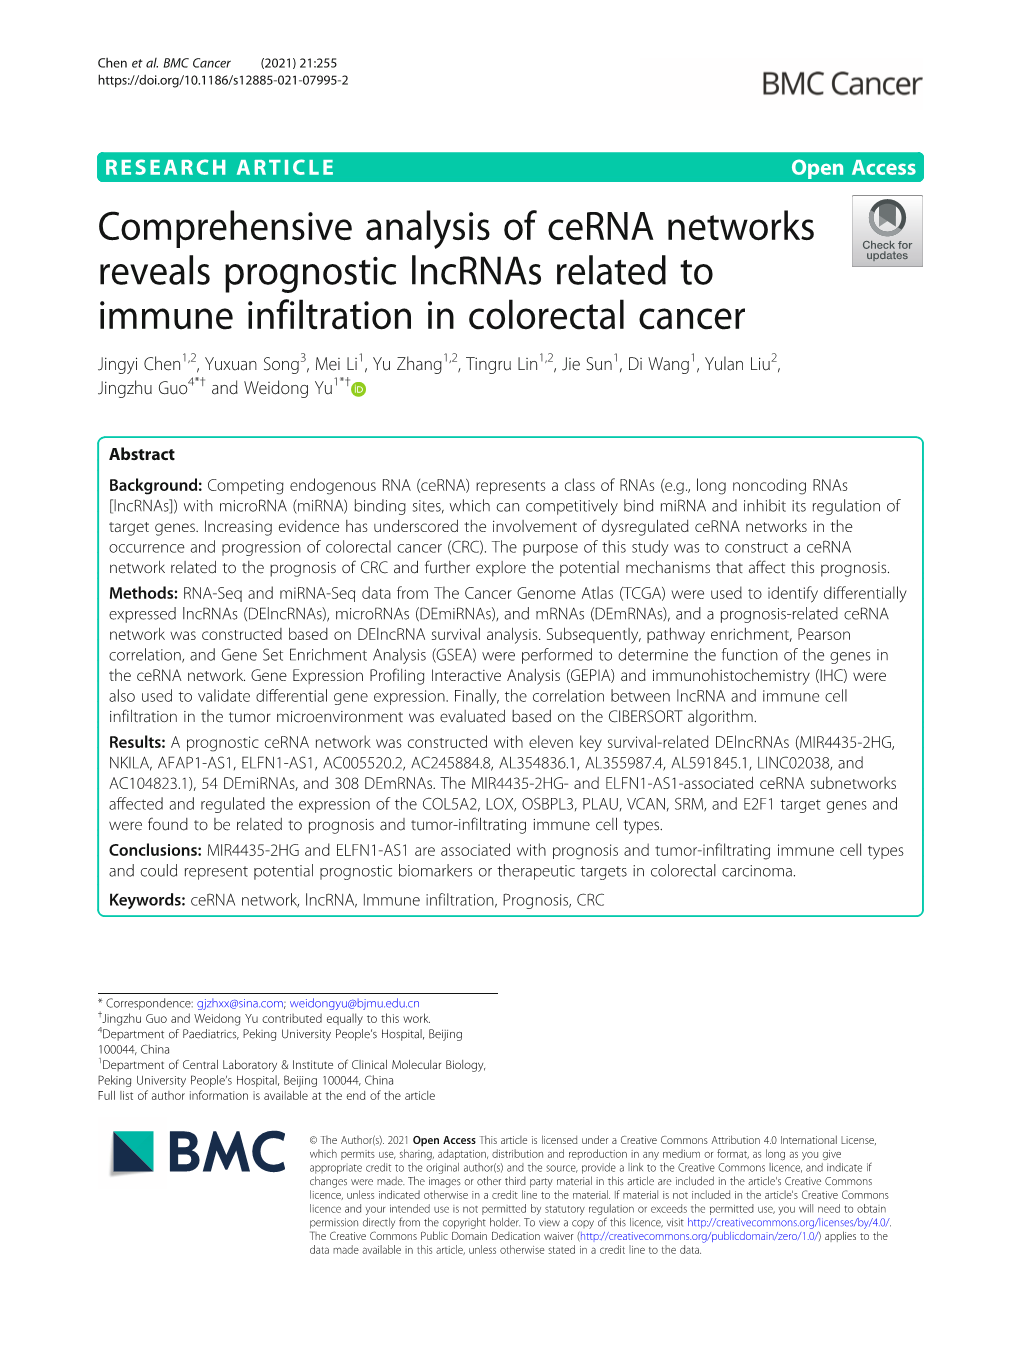 Comprehensive Analysis of Cerna Networks Reveals Prognostic